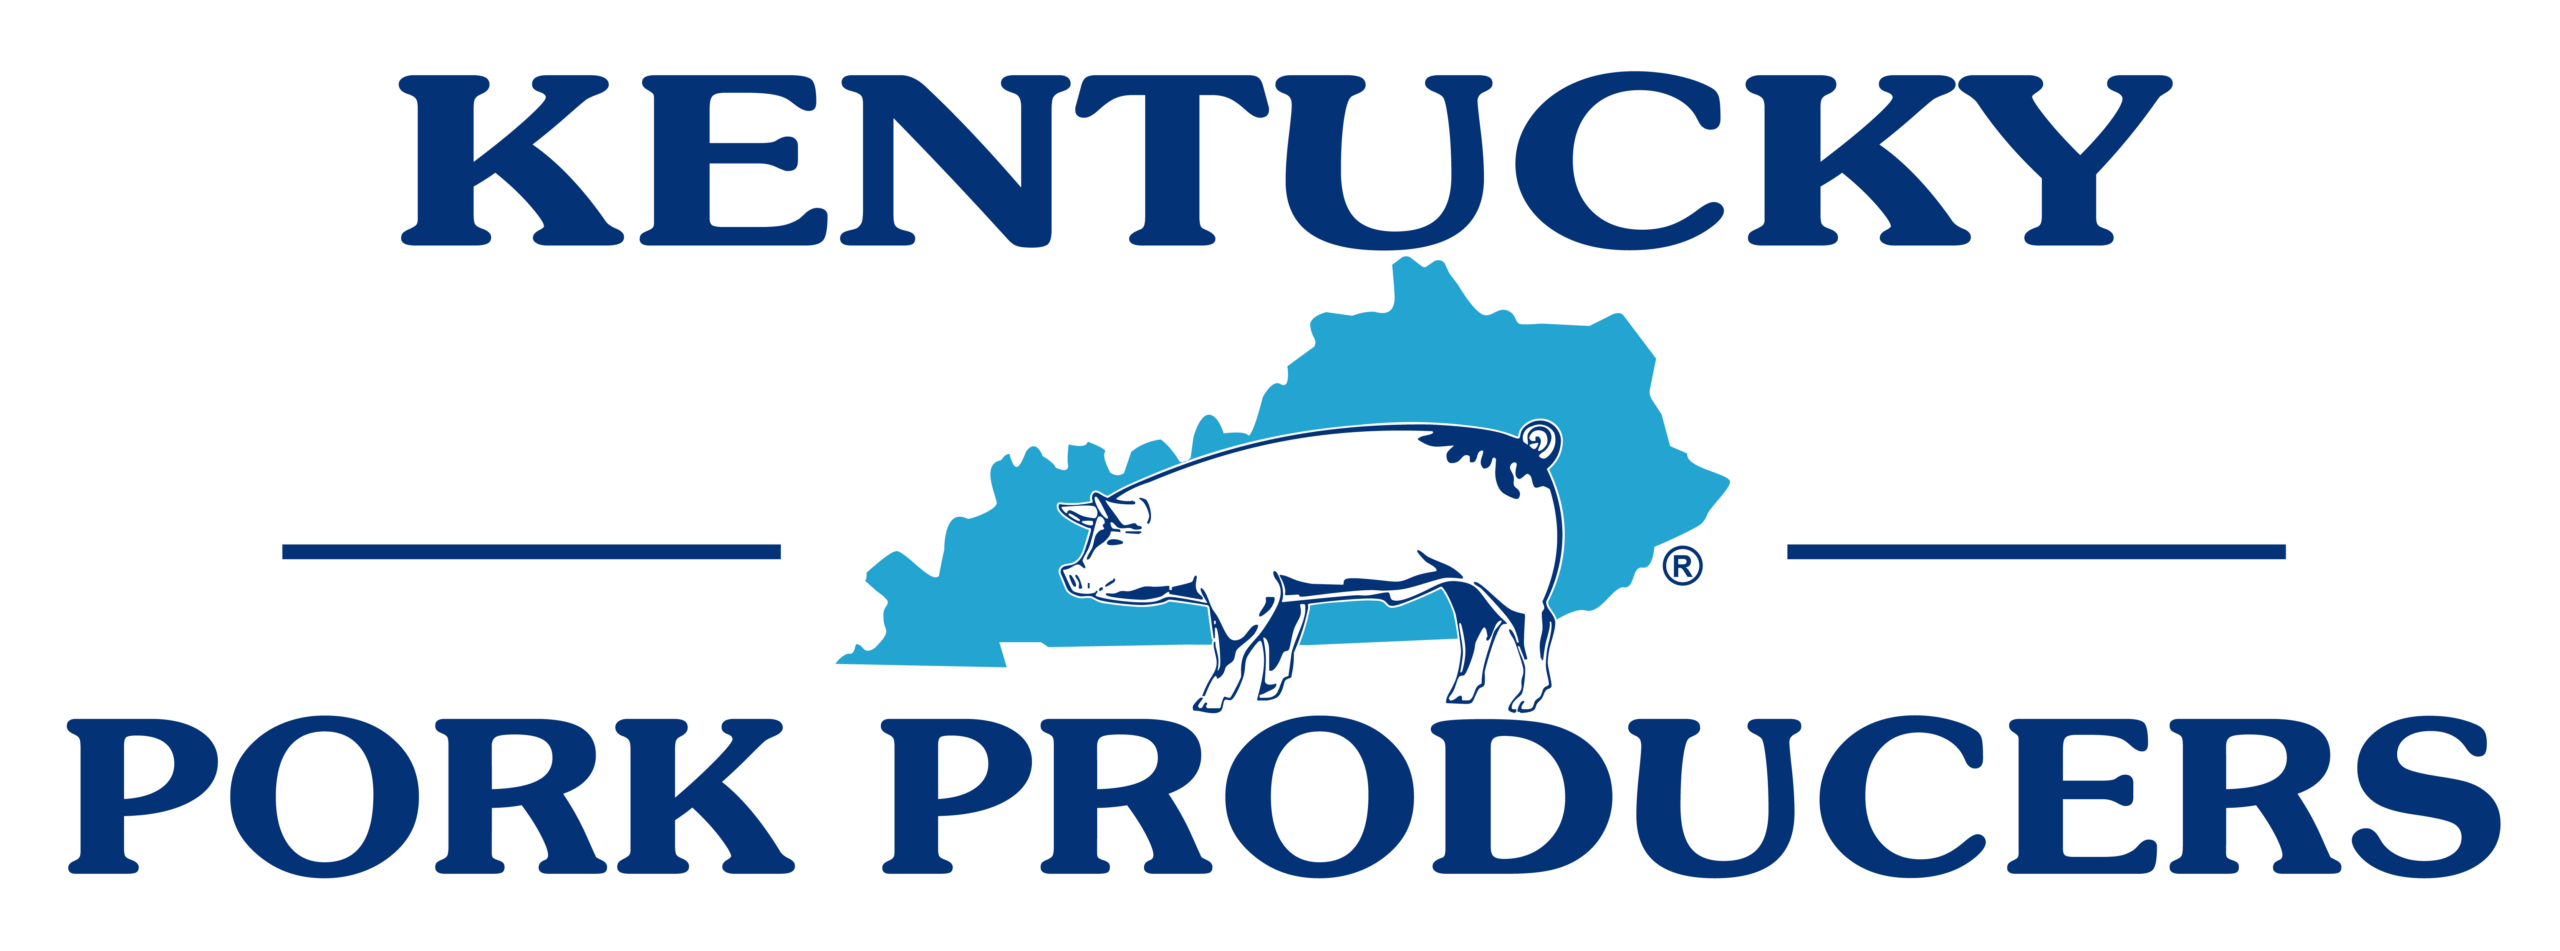 Kentucky Pork Producers Association